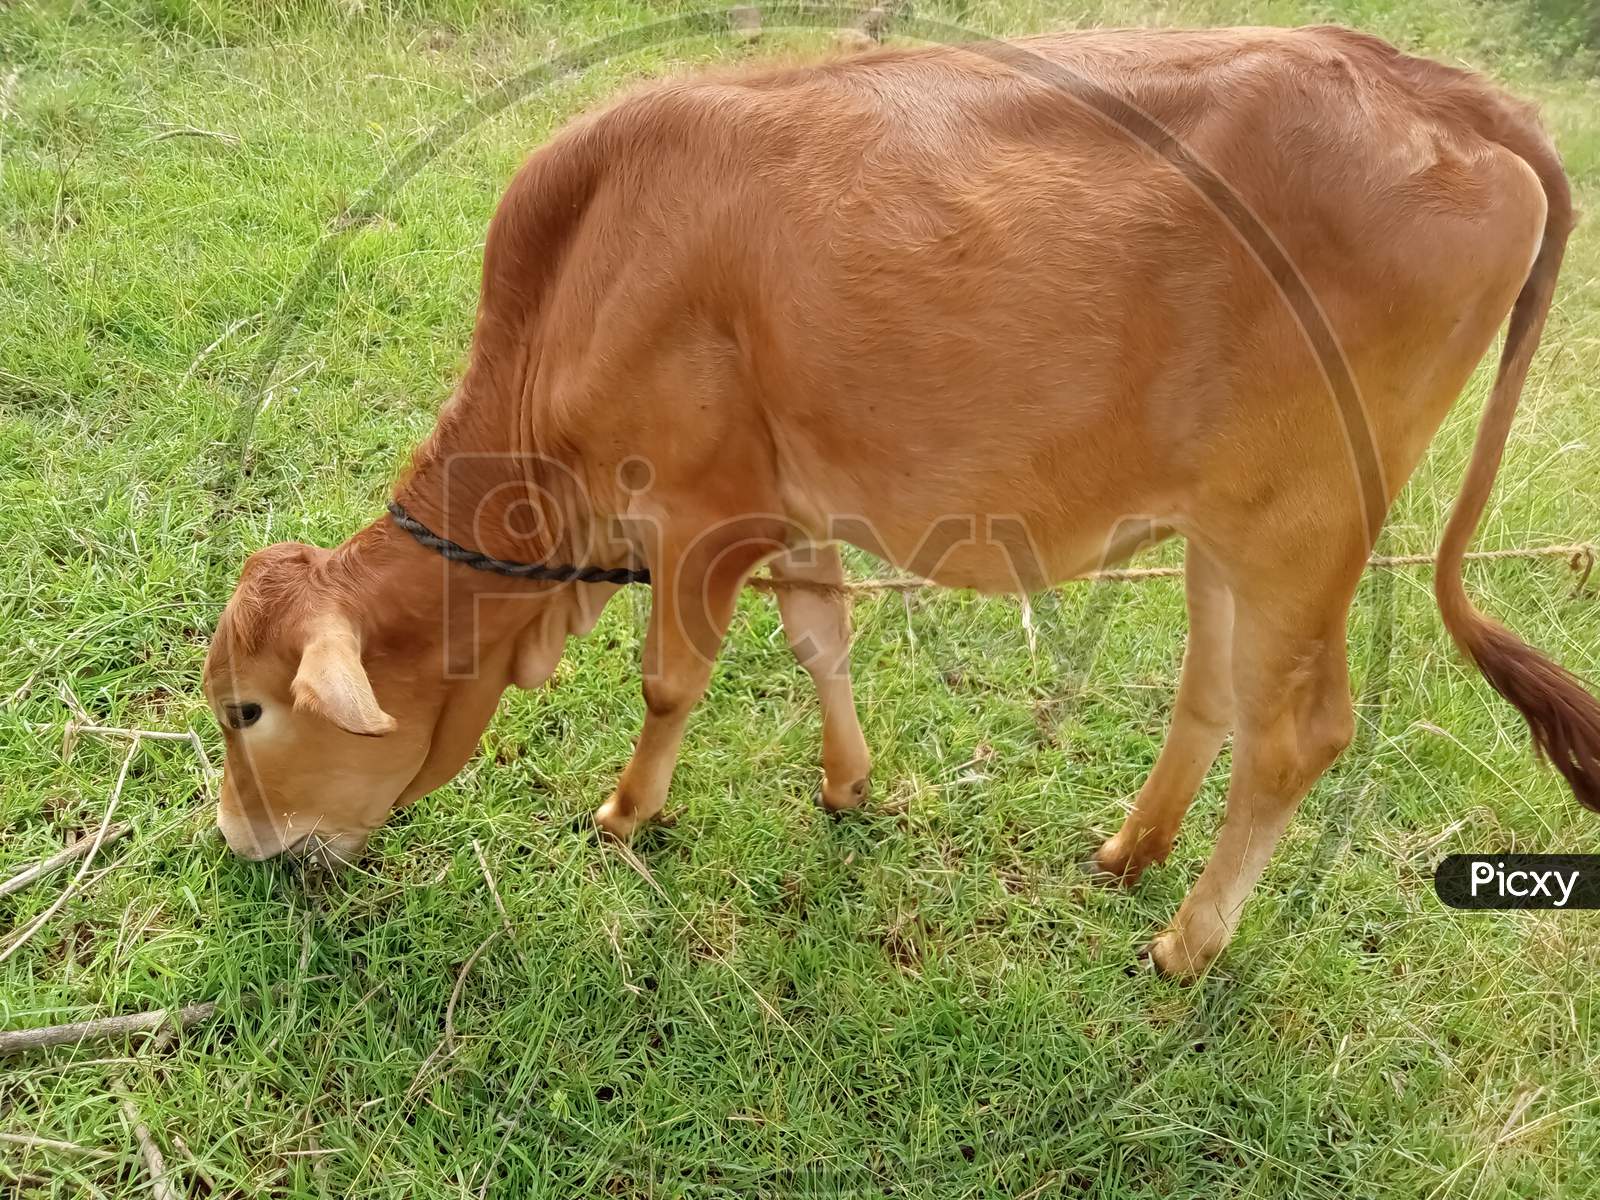 The cow eats grass